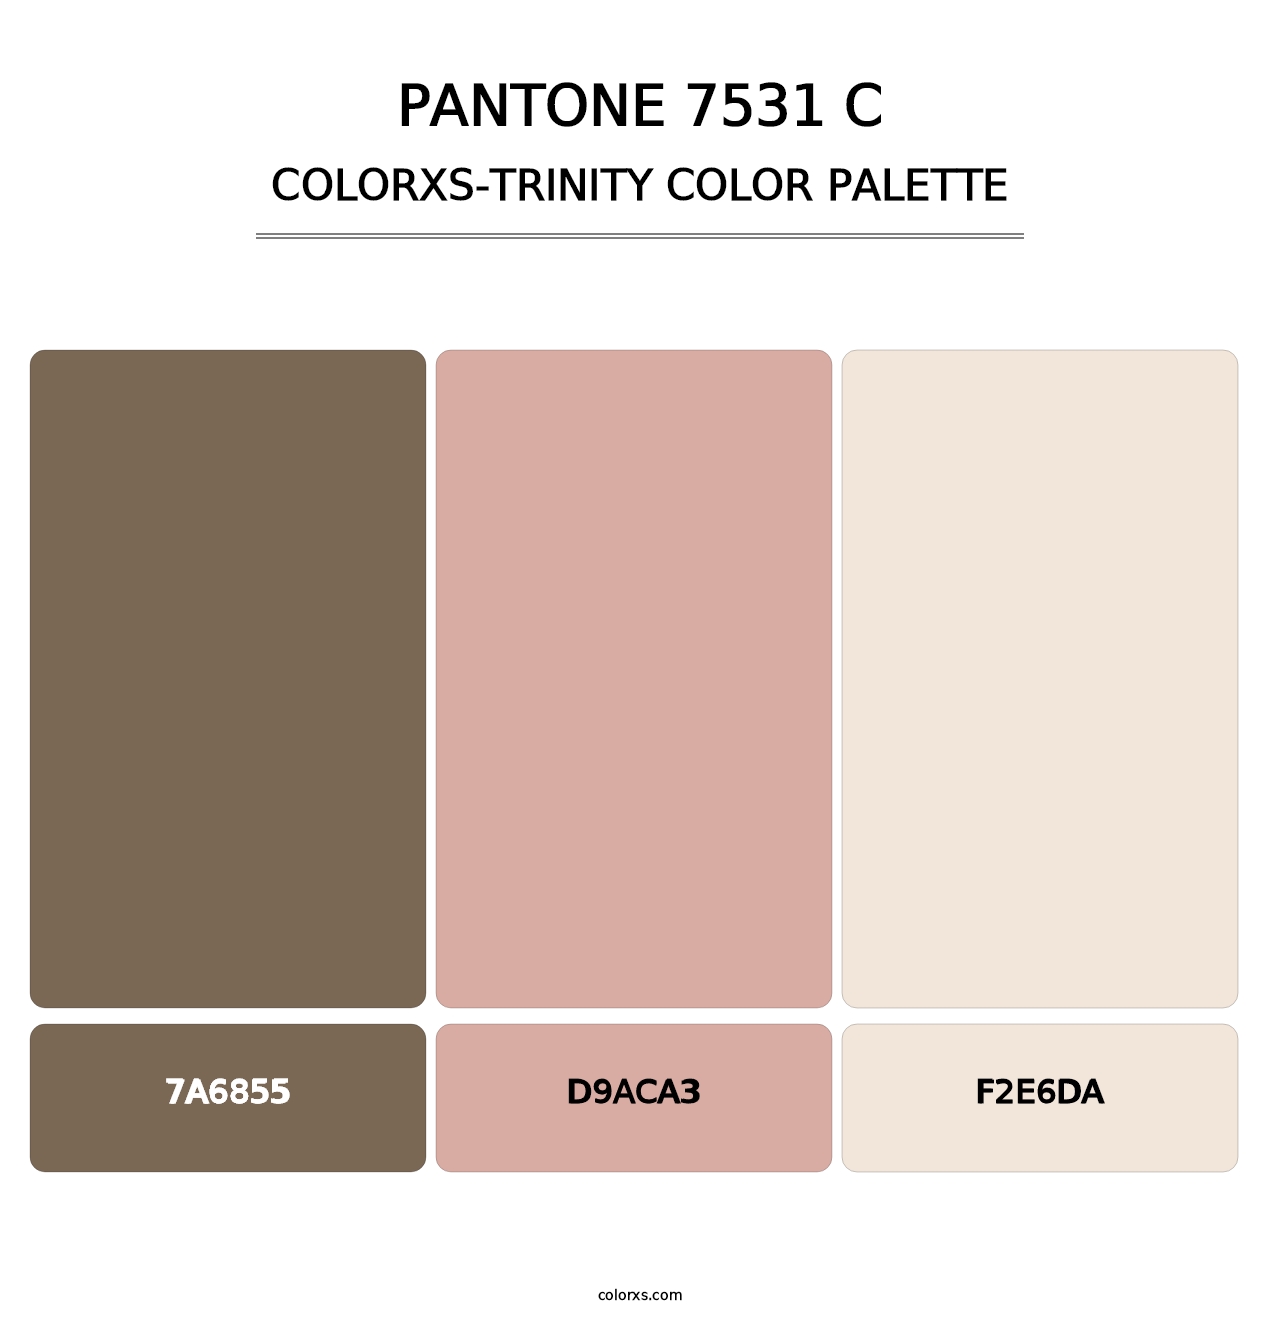 PANTONE 7531 C - Colorxs Trinity Palette